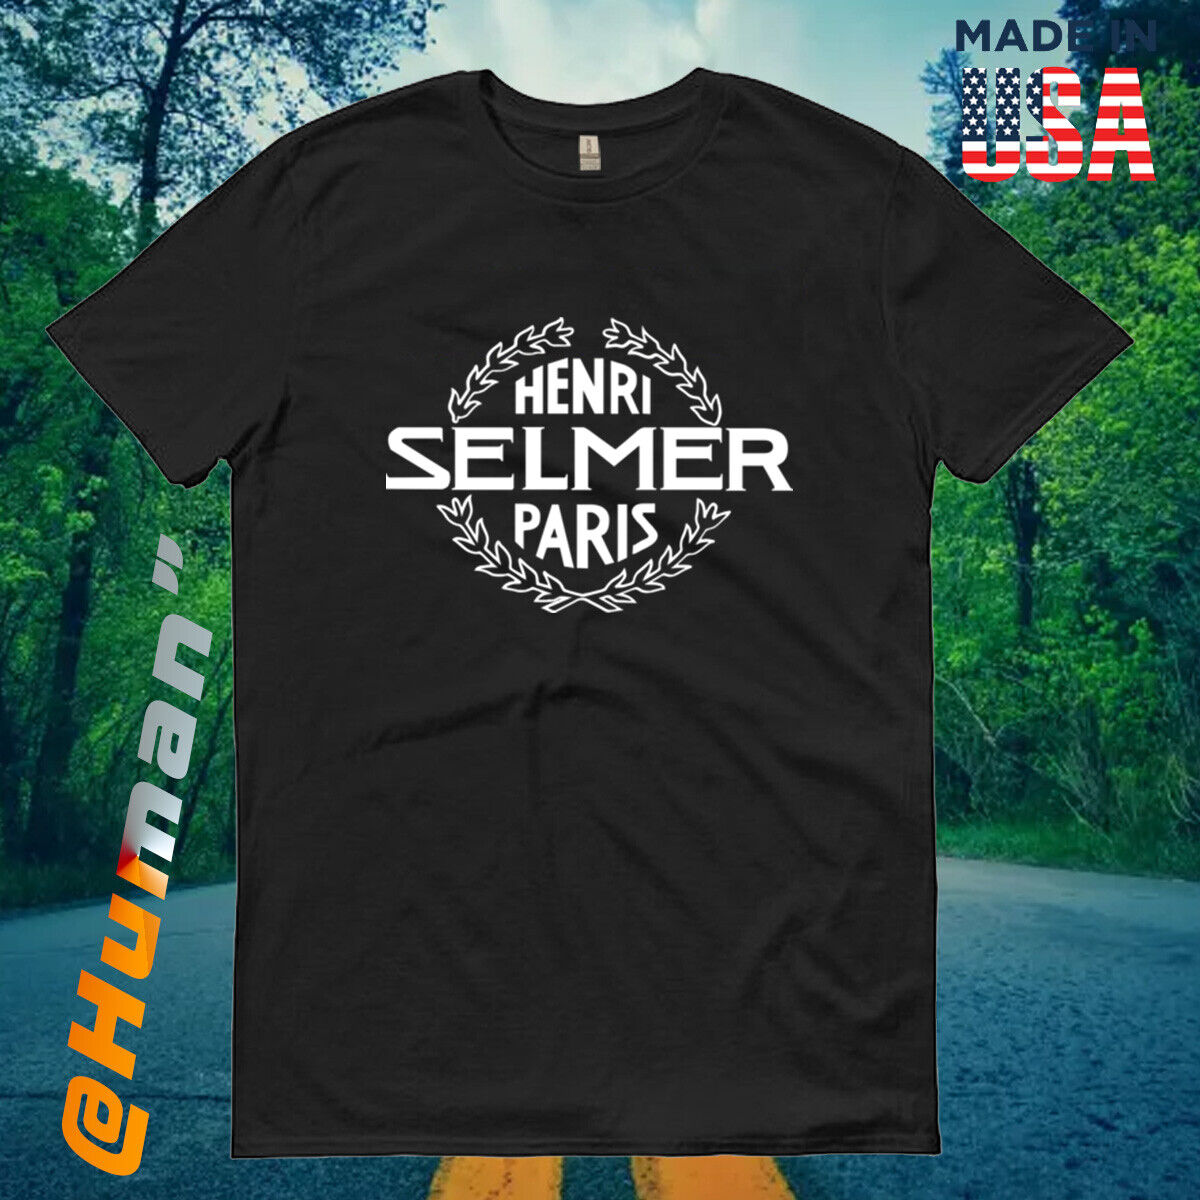 New Henri Selmer Paris Logo T-Shirt Unisex USA size S-5XL 